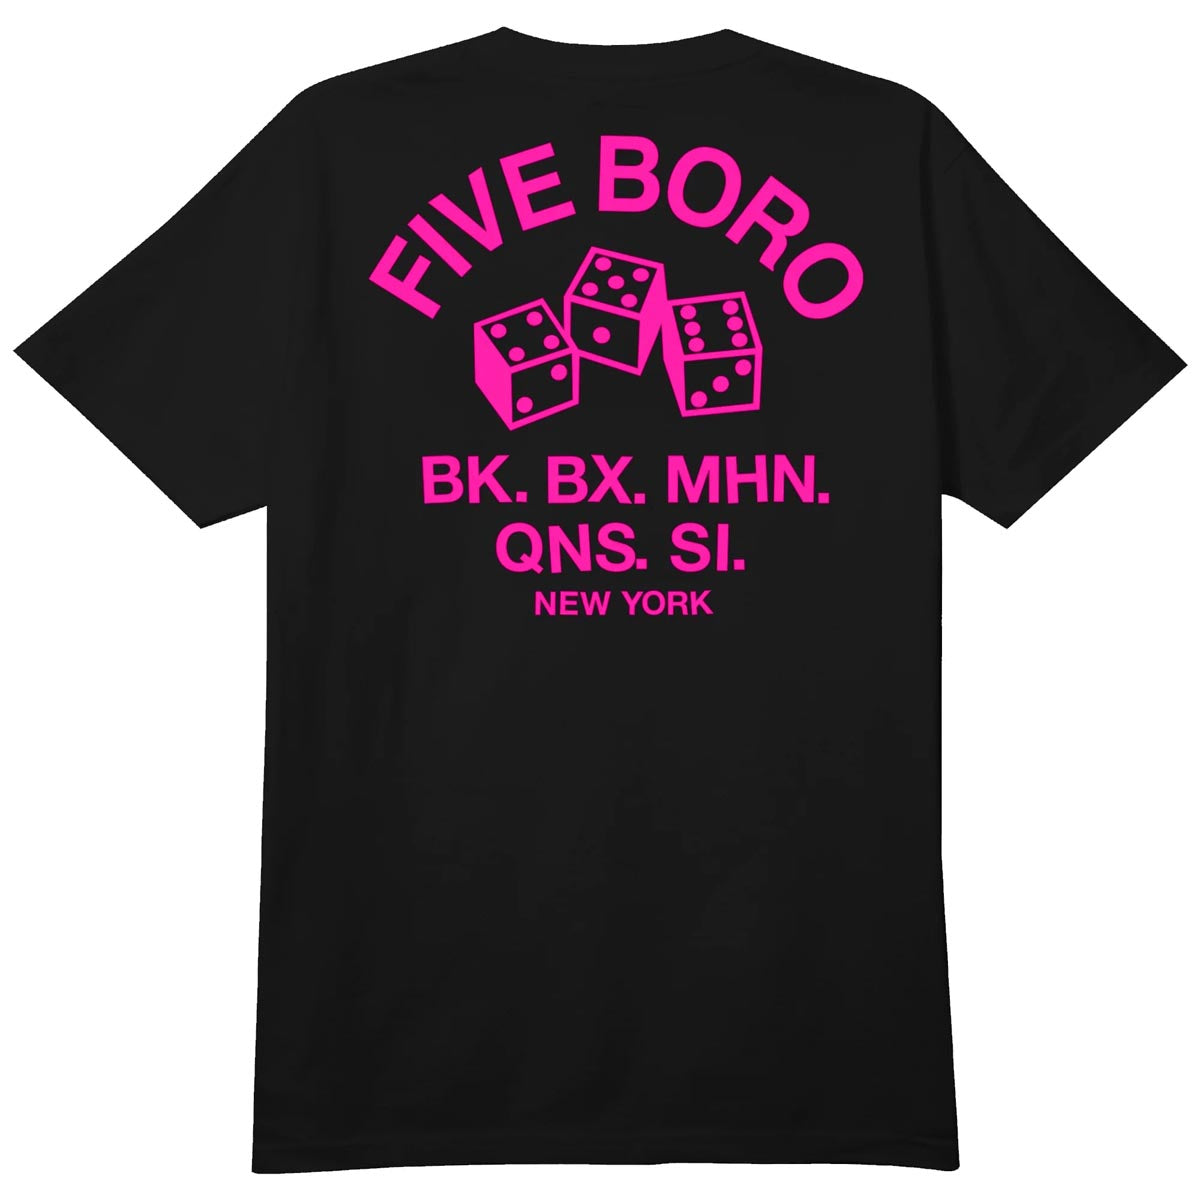 5Boro 4-5-6 Dice T-Shirt - Black/Pink image 2